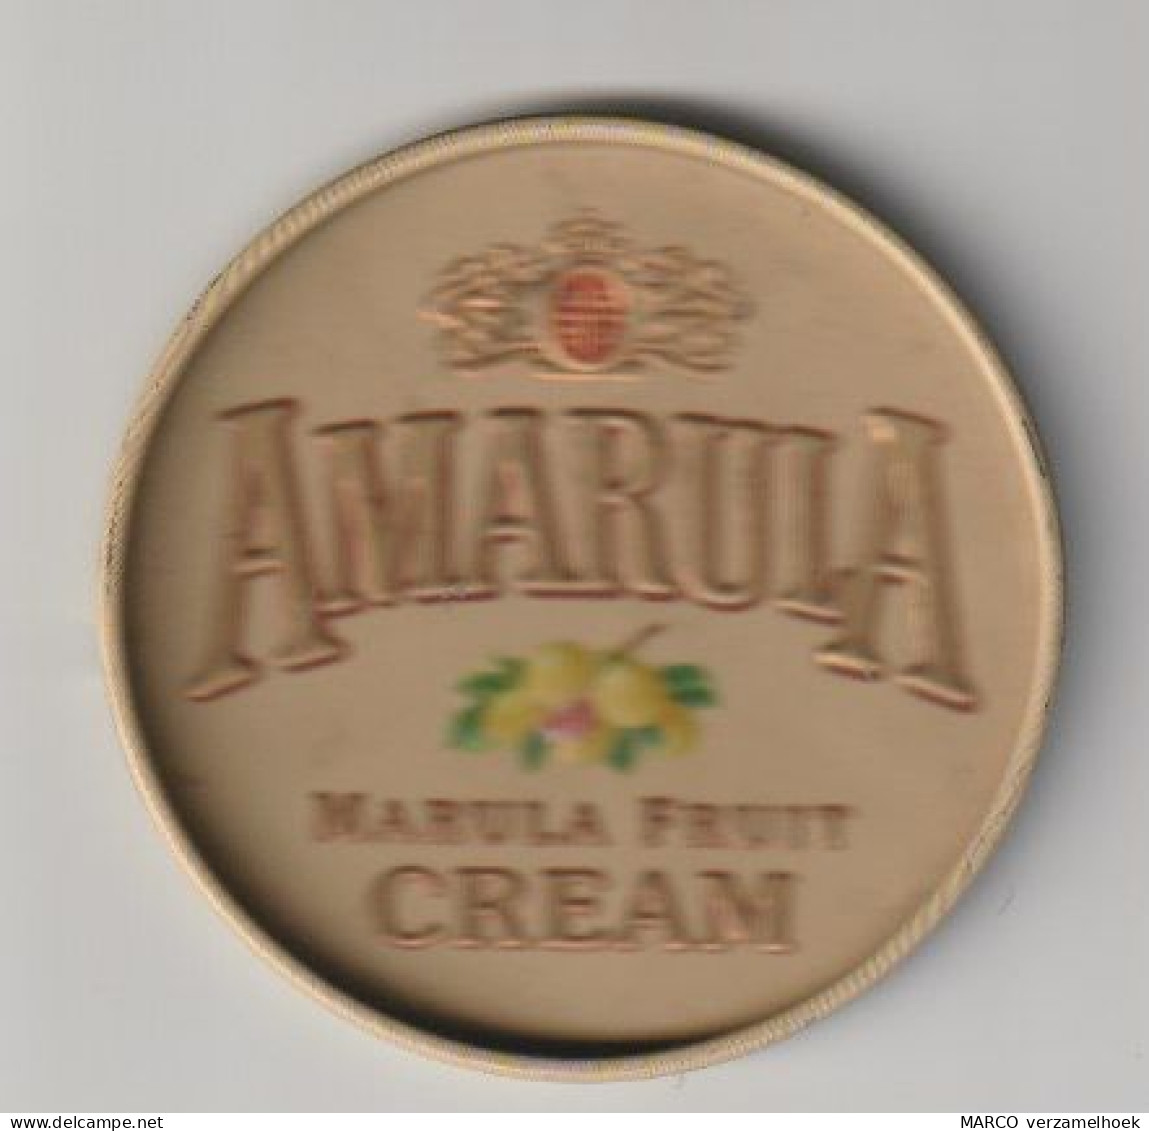 Bierviltje-bierdeckel-beermat AMARULA Cream & Marula Fruit Zuid-afrika South Africa (Z-A) - Portavasos